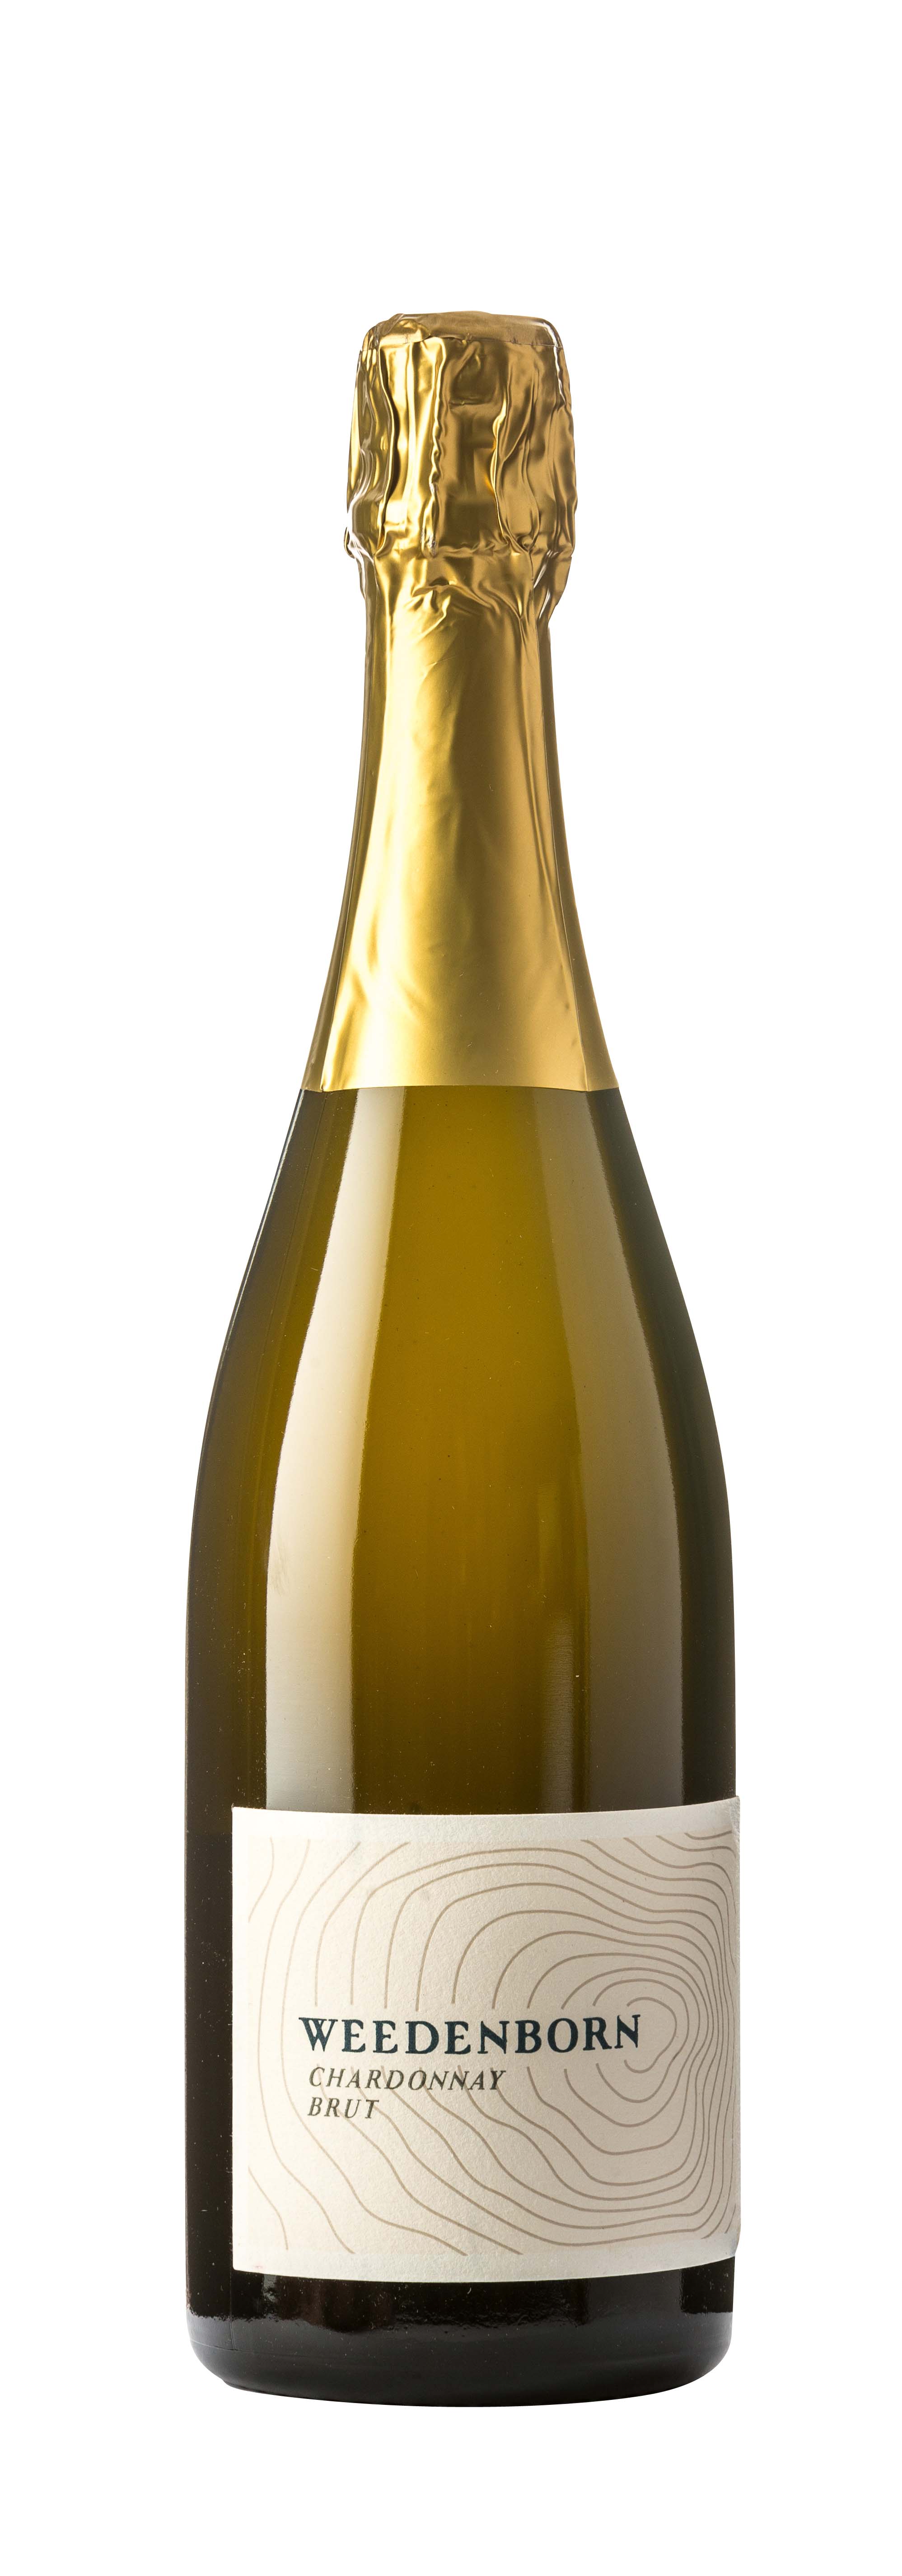 Chardonnay Brut 2014